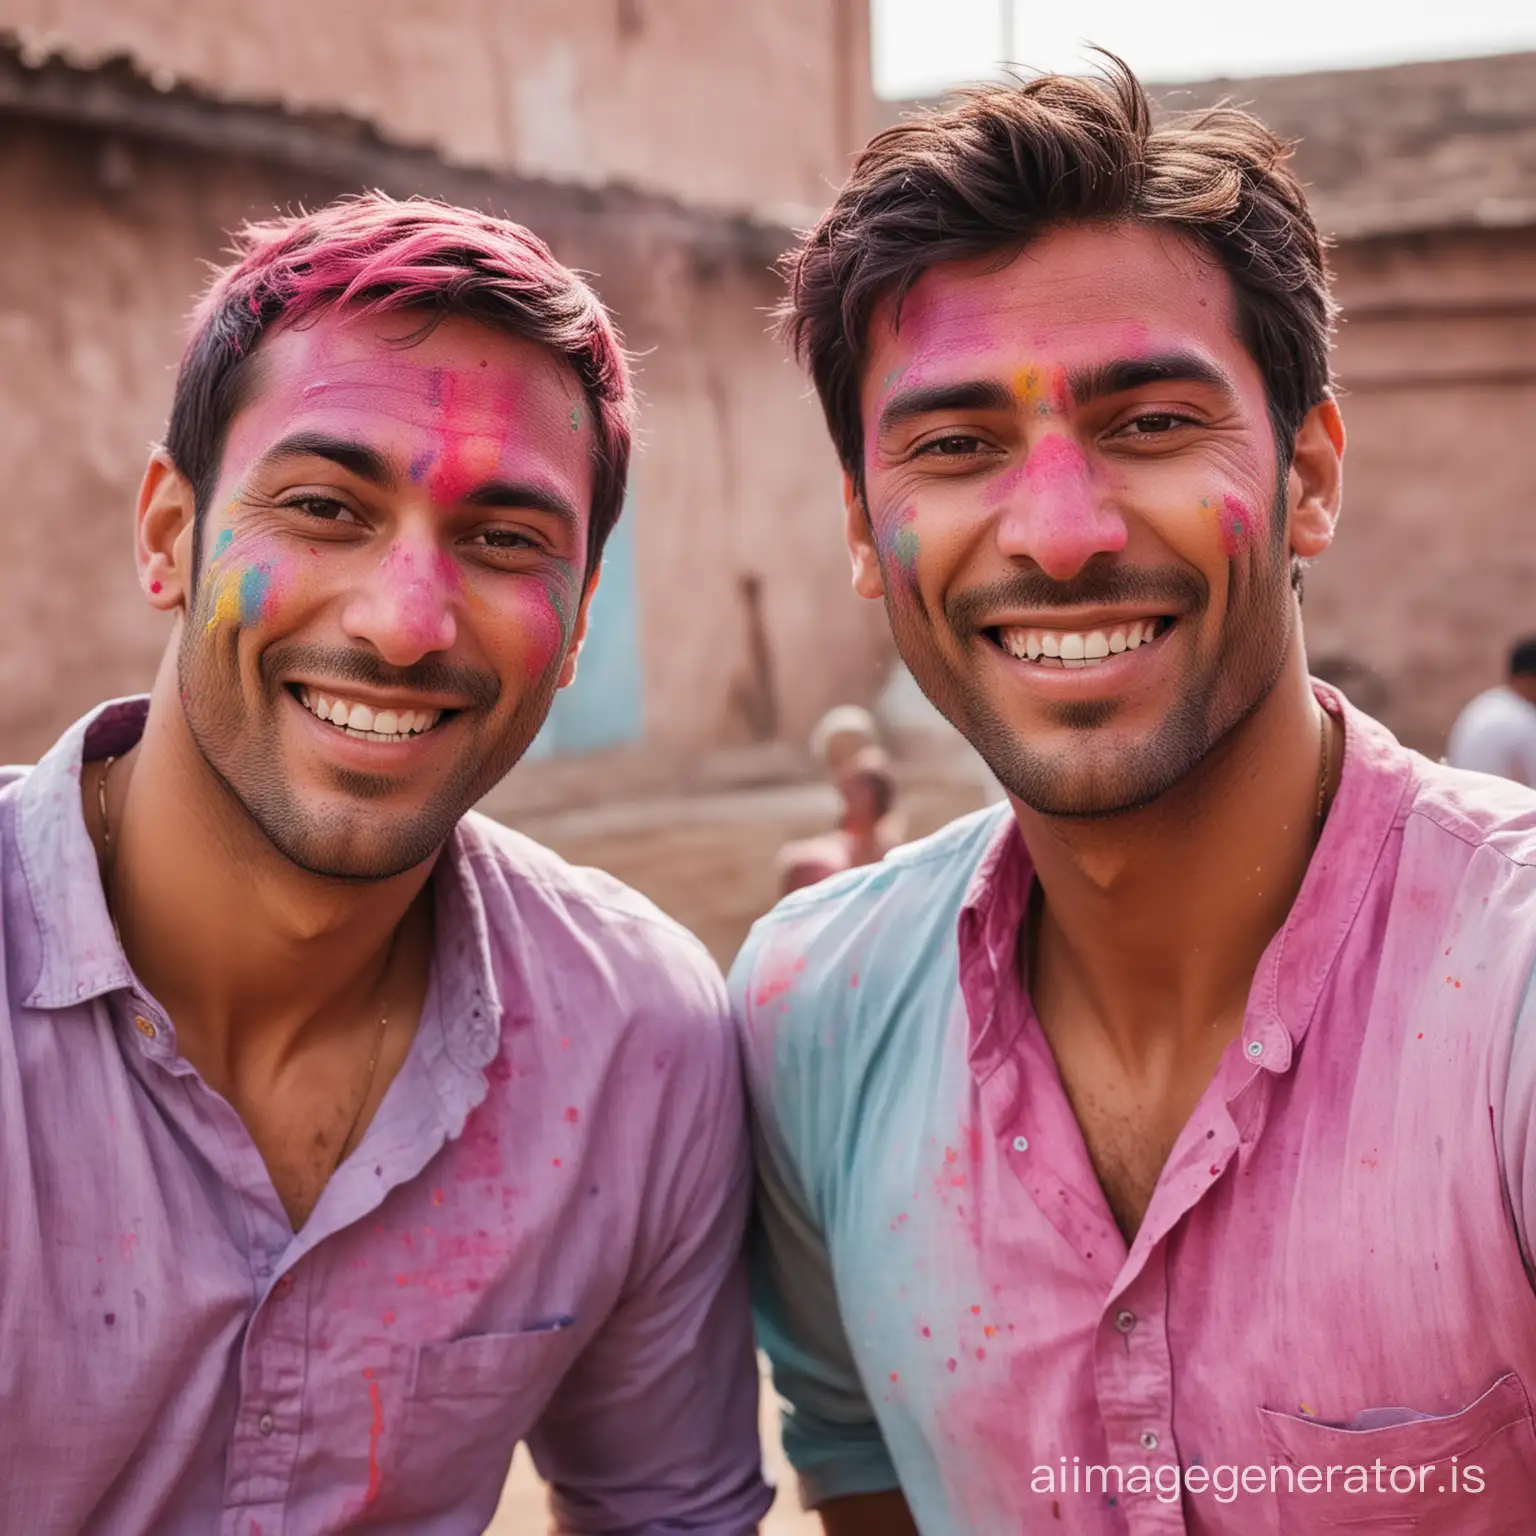 Joyful-Men-Celebrating-Holi-Festival-with-Colorful-Dances